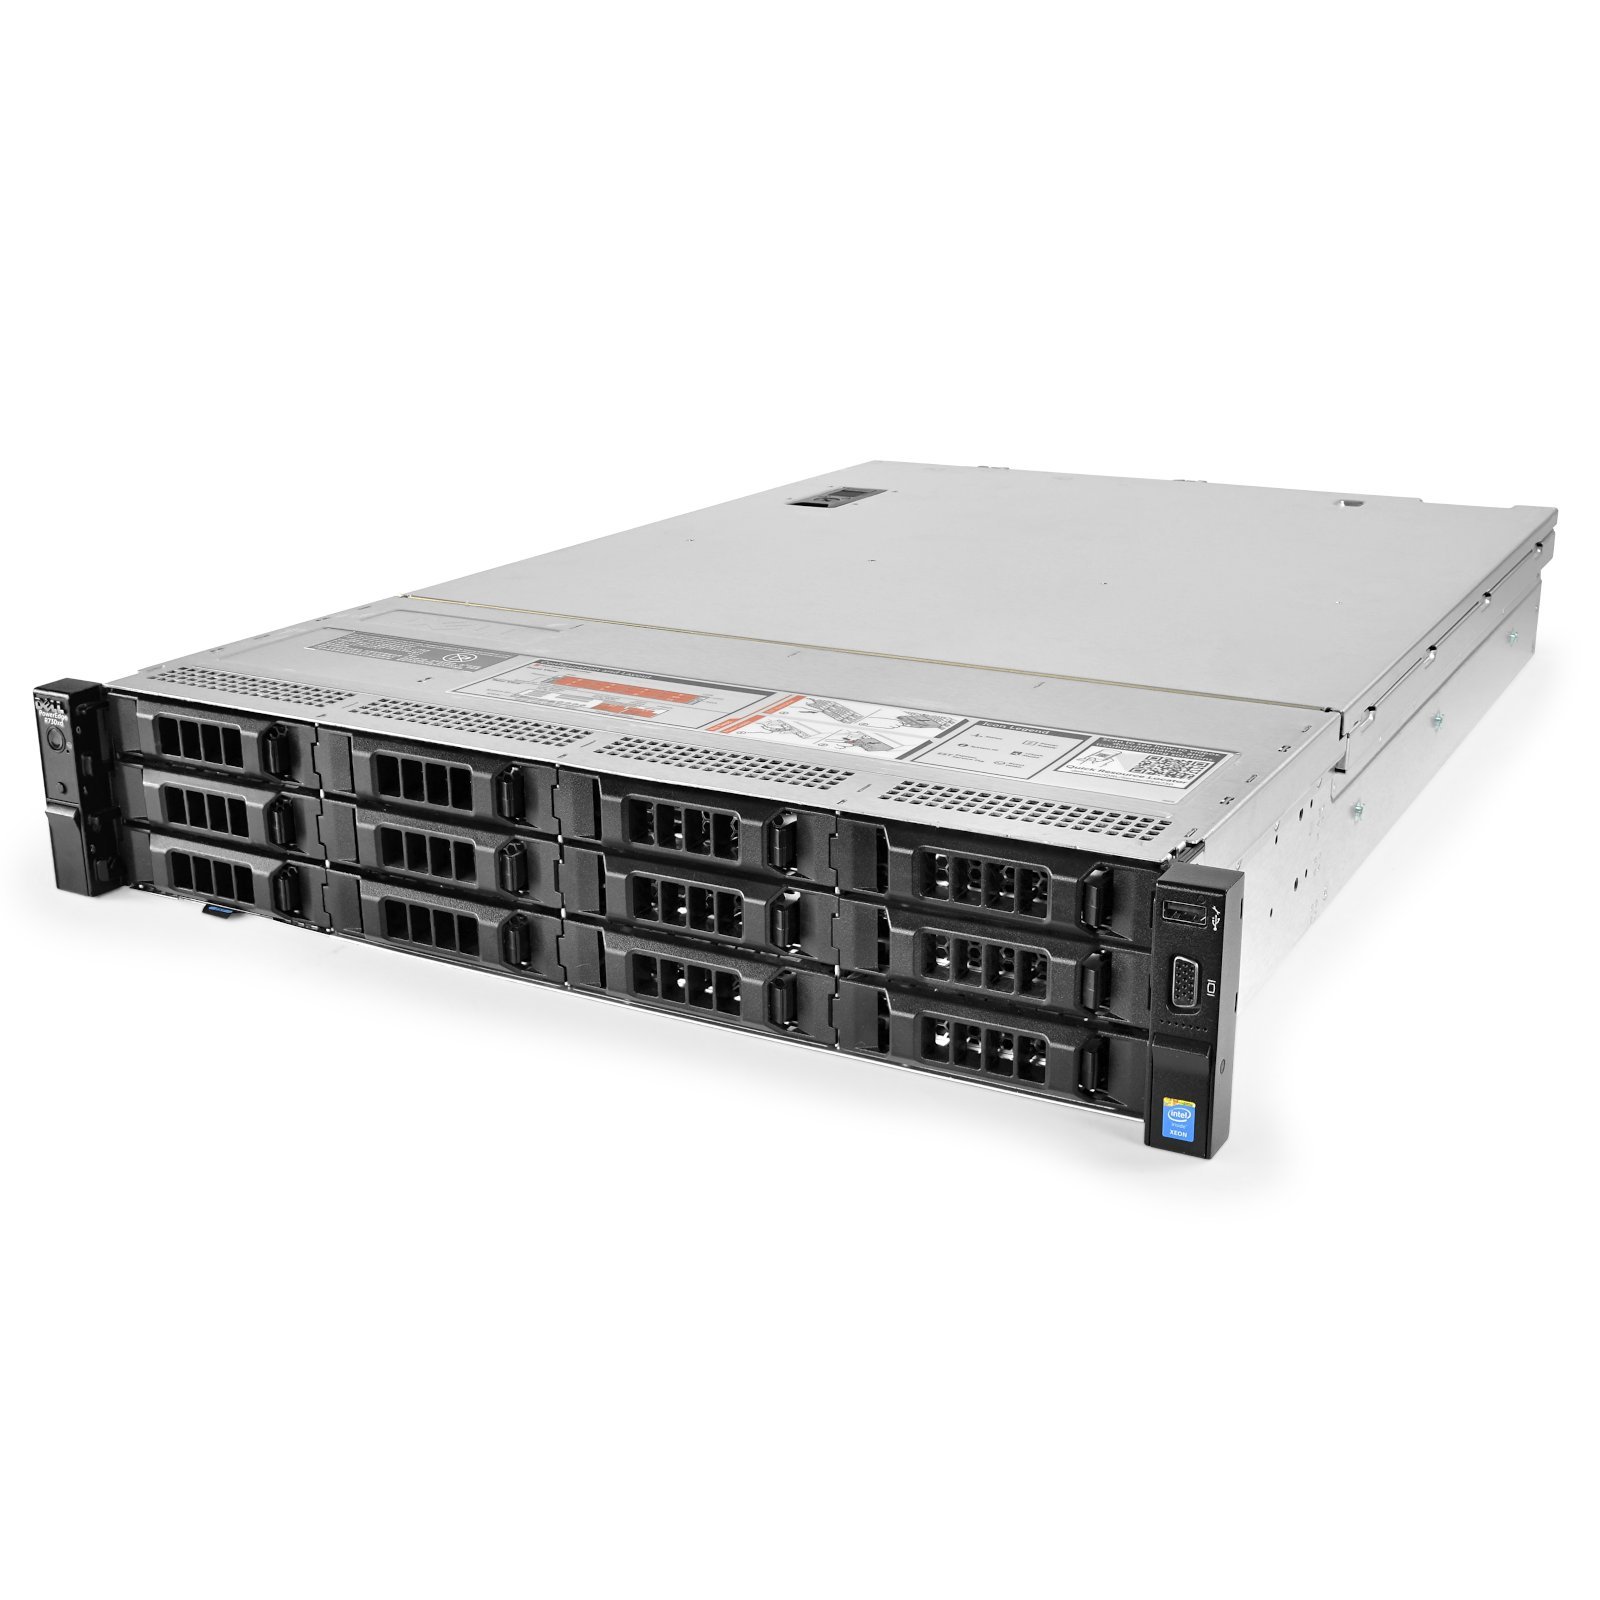 Подробное фото Сервер DELL PowerEdge R730XD Xeon 2x E5-2699v3 128Gb 2133P DDR4 12x noHDD 3.5", SAS RAID Perc H730 mini, 1024Mb, 2*PSU 750W